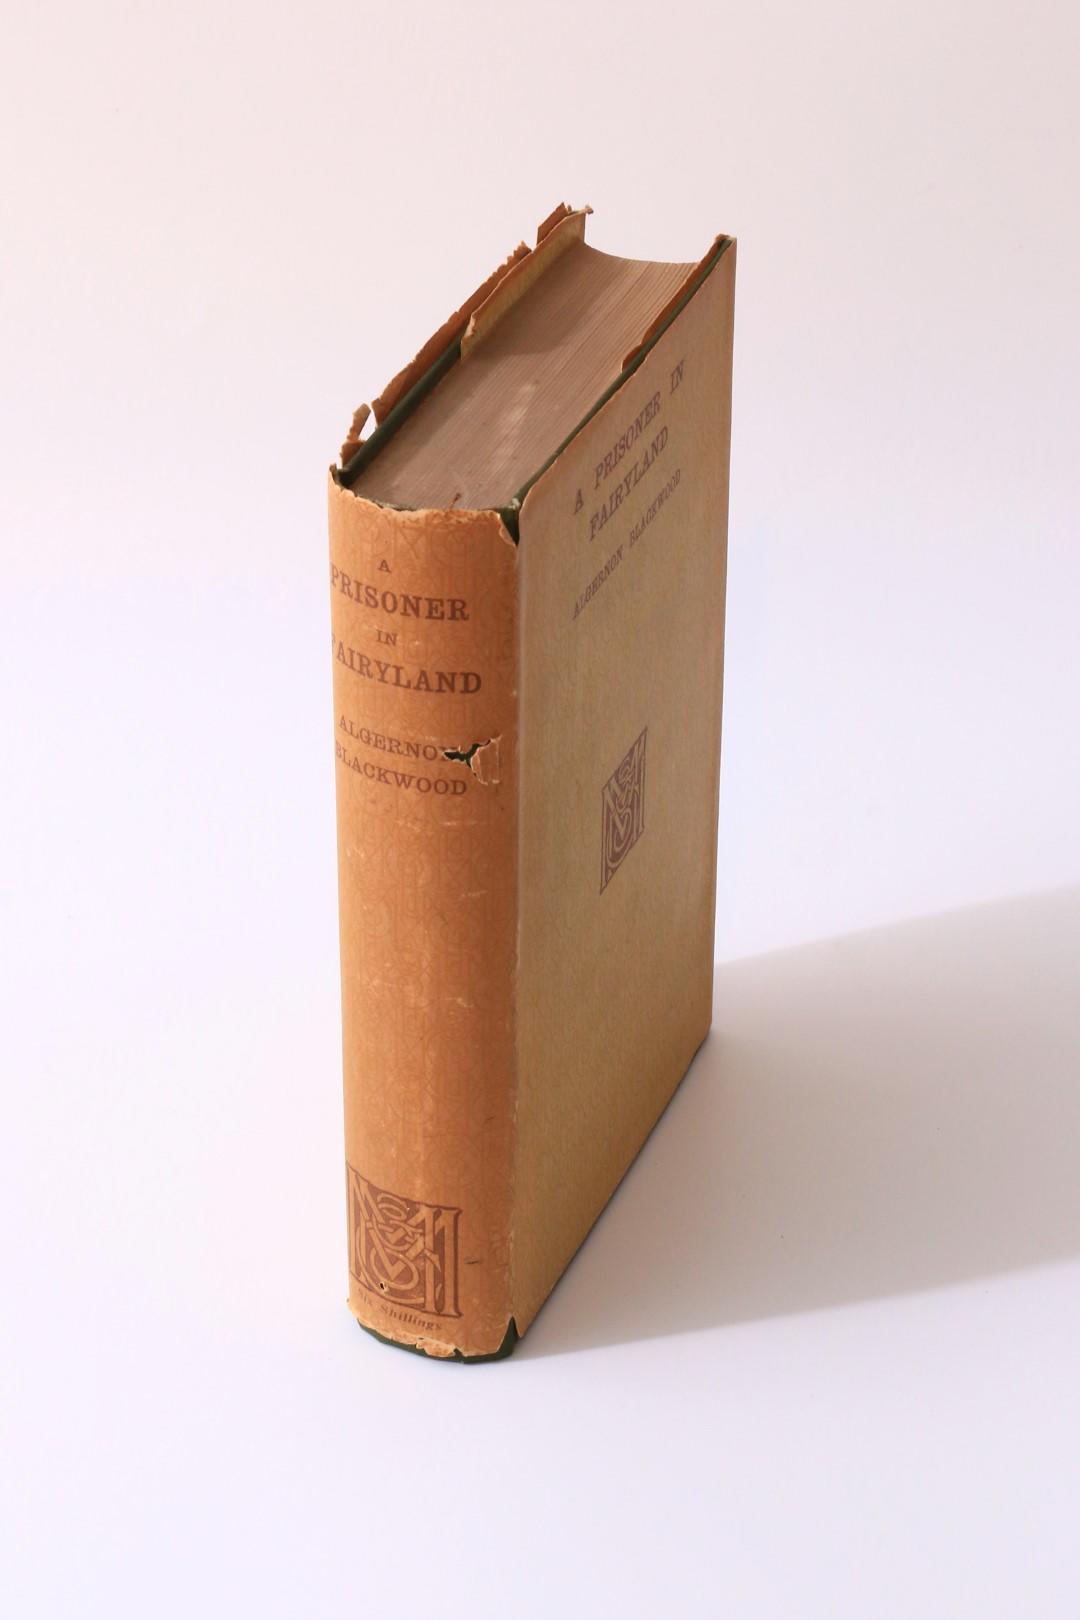 Algernon Blackwood - A Prisoner in Fairyland - MacMillan, 1913, First Edition.